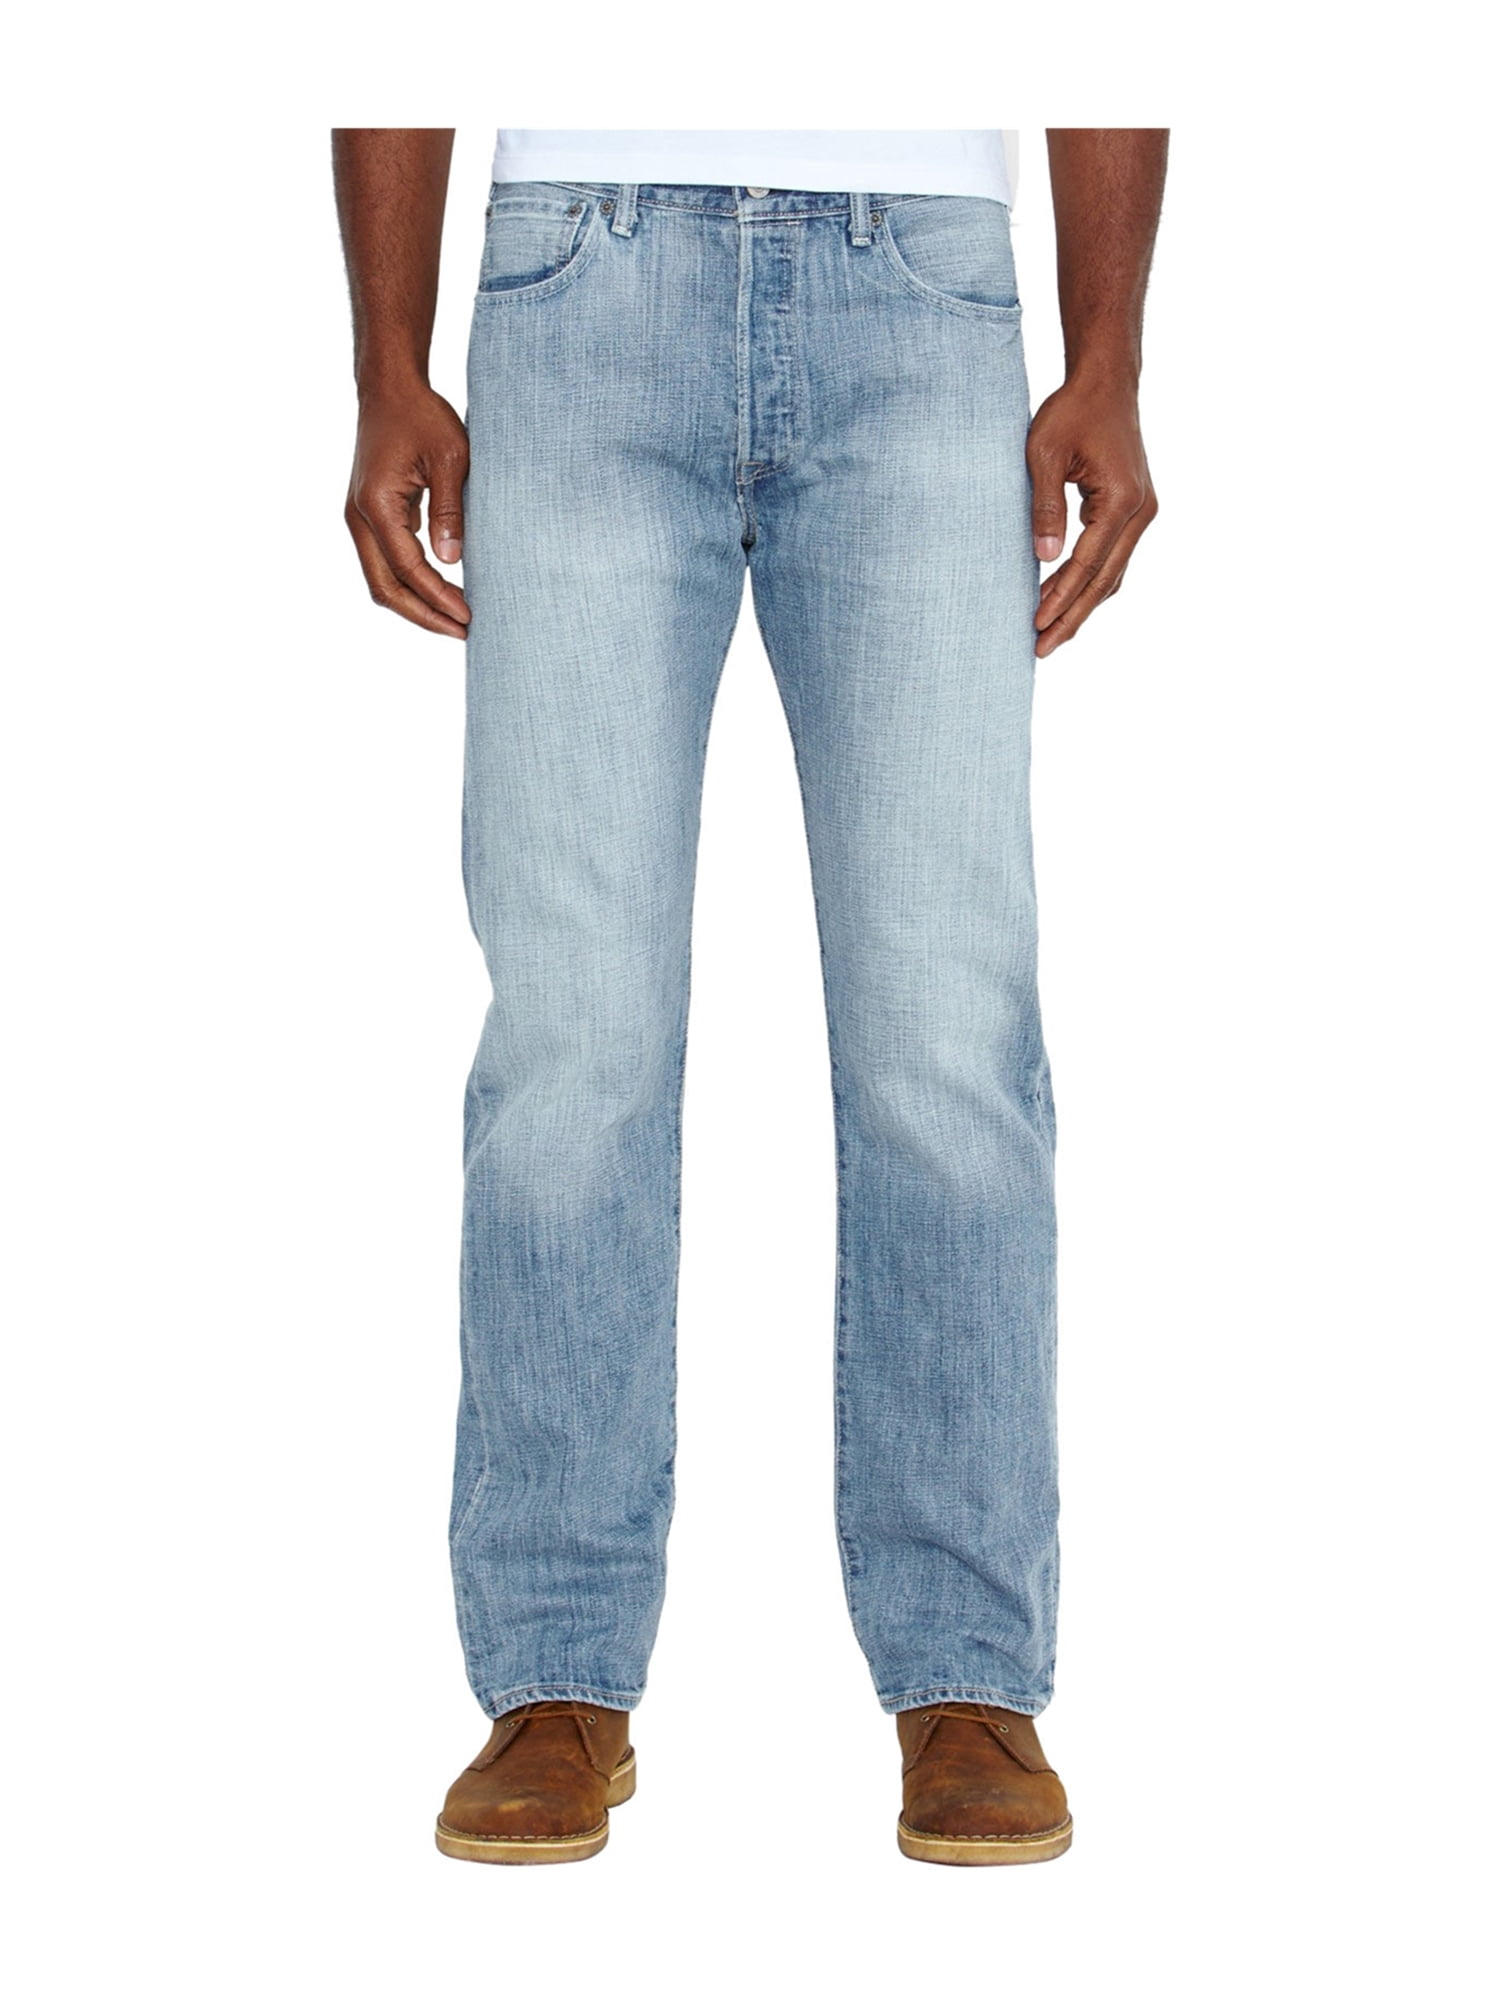 Levi's Mens 501 Original Regular Fit Jeans lightmist 31x30 | Walmart Canada